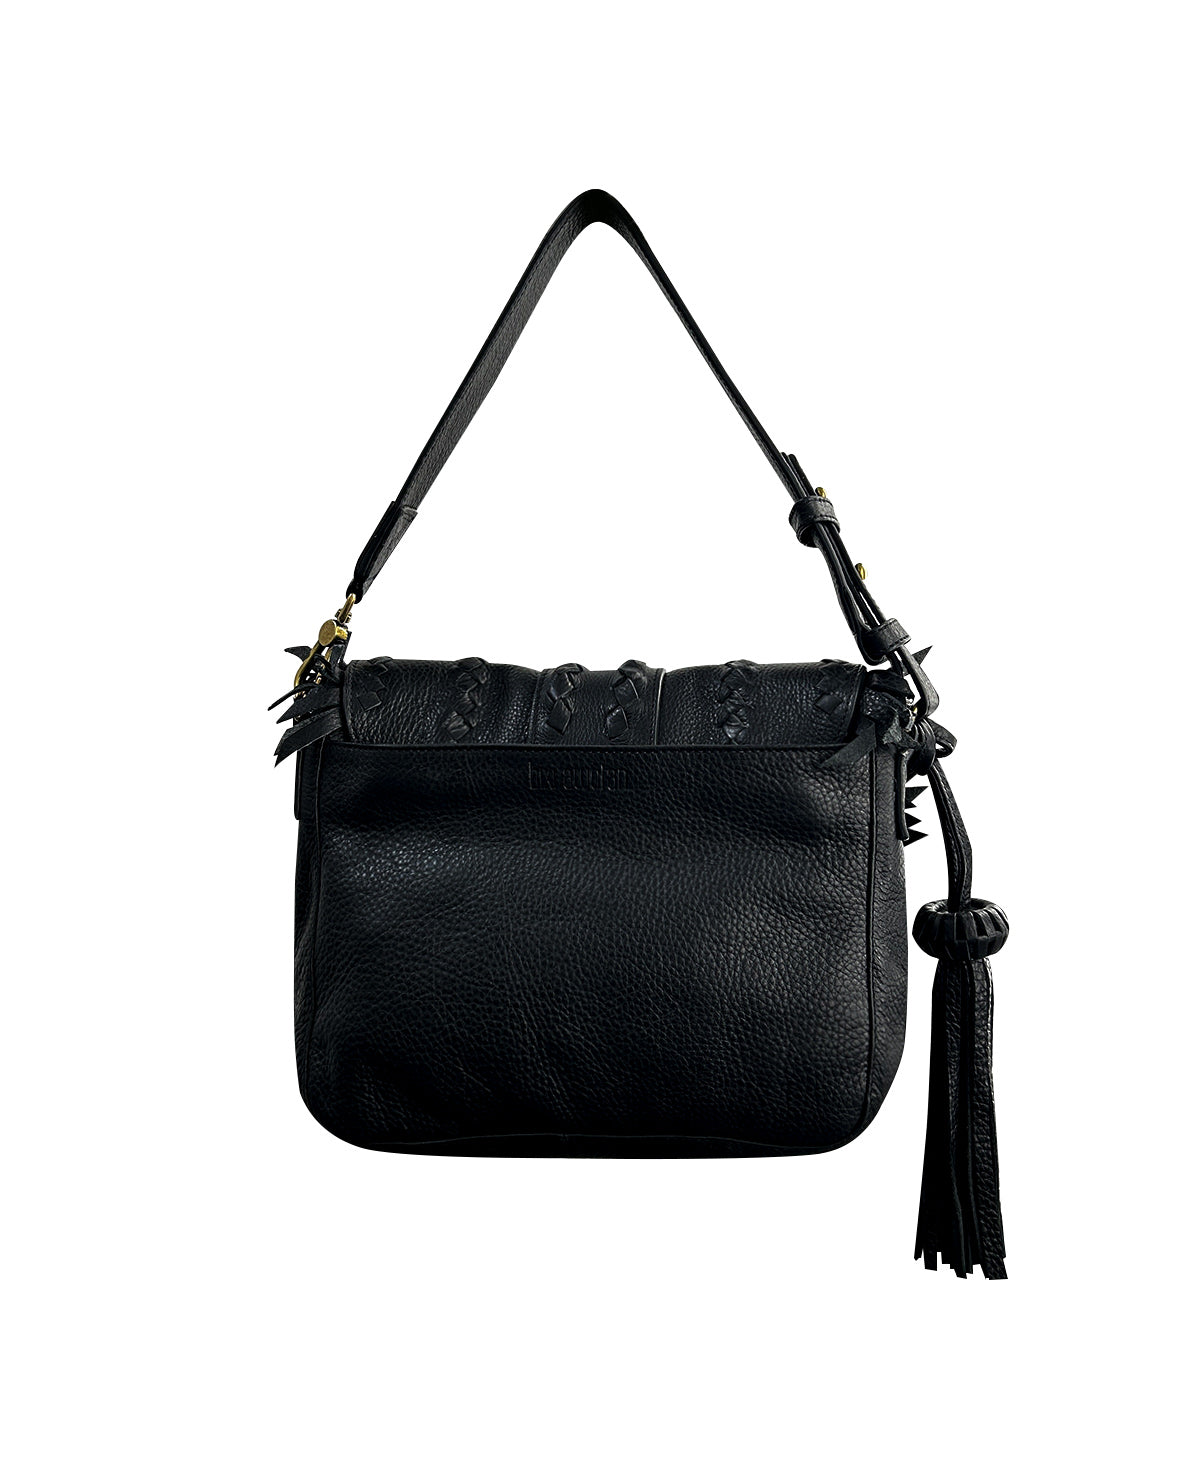 Black SENECA Leather Bag with Braids & Frings Details